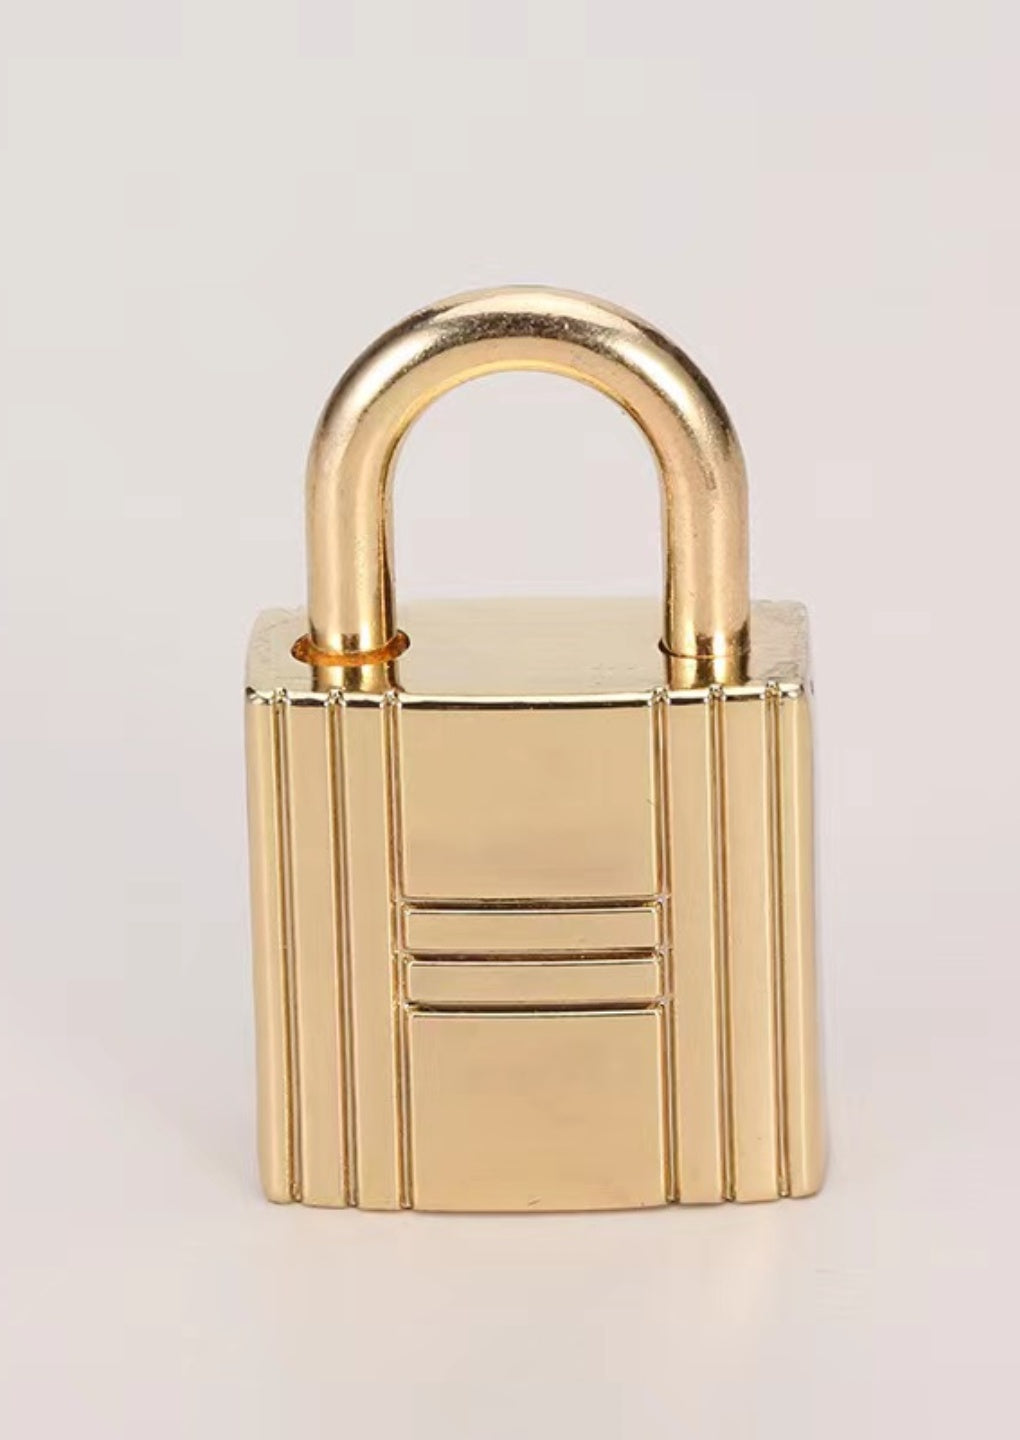 Fashion Handbag Fitting Accessories Square Shape Bag Lock Alloy Turn Twist Lock for Leather Bags Hardware-30